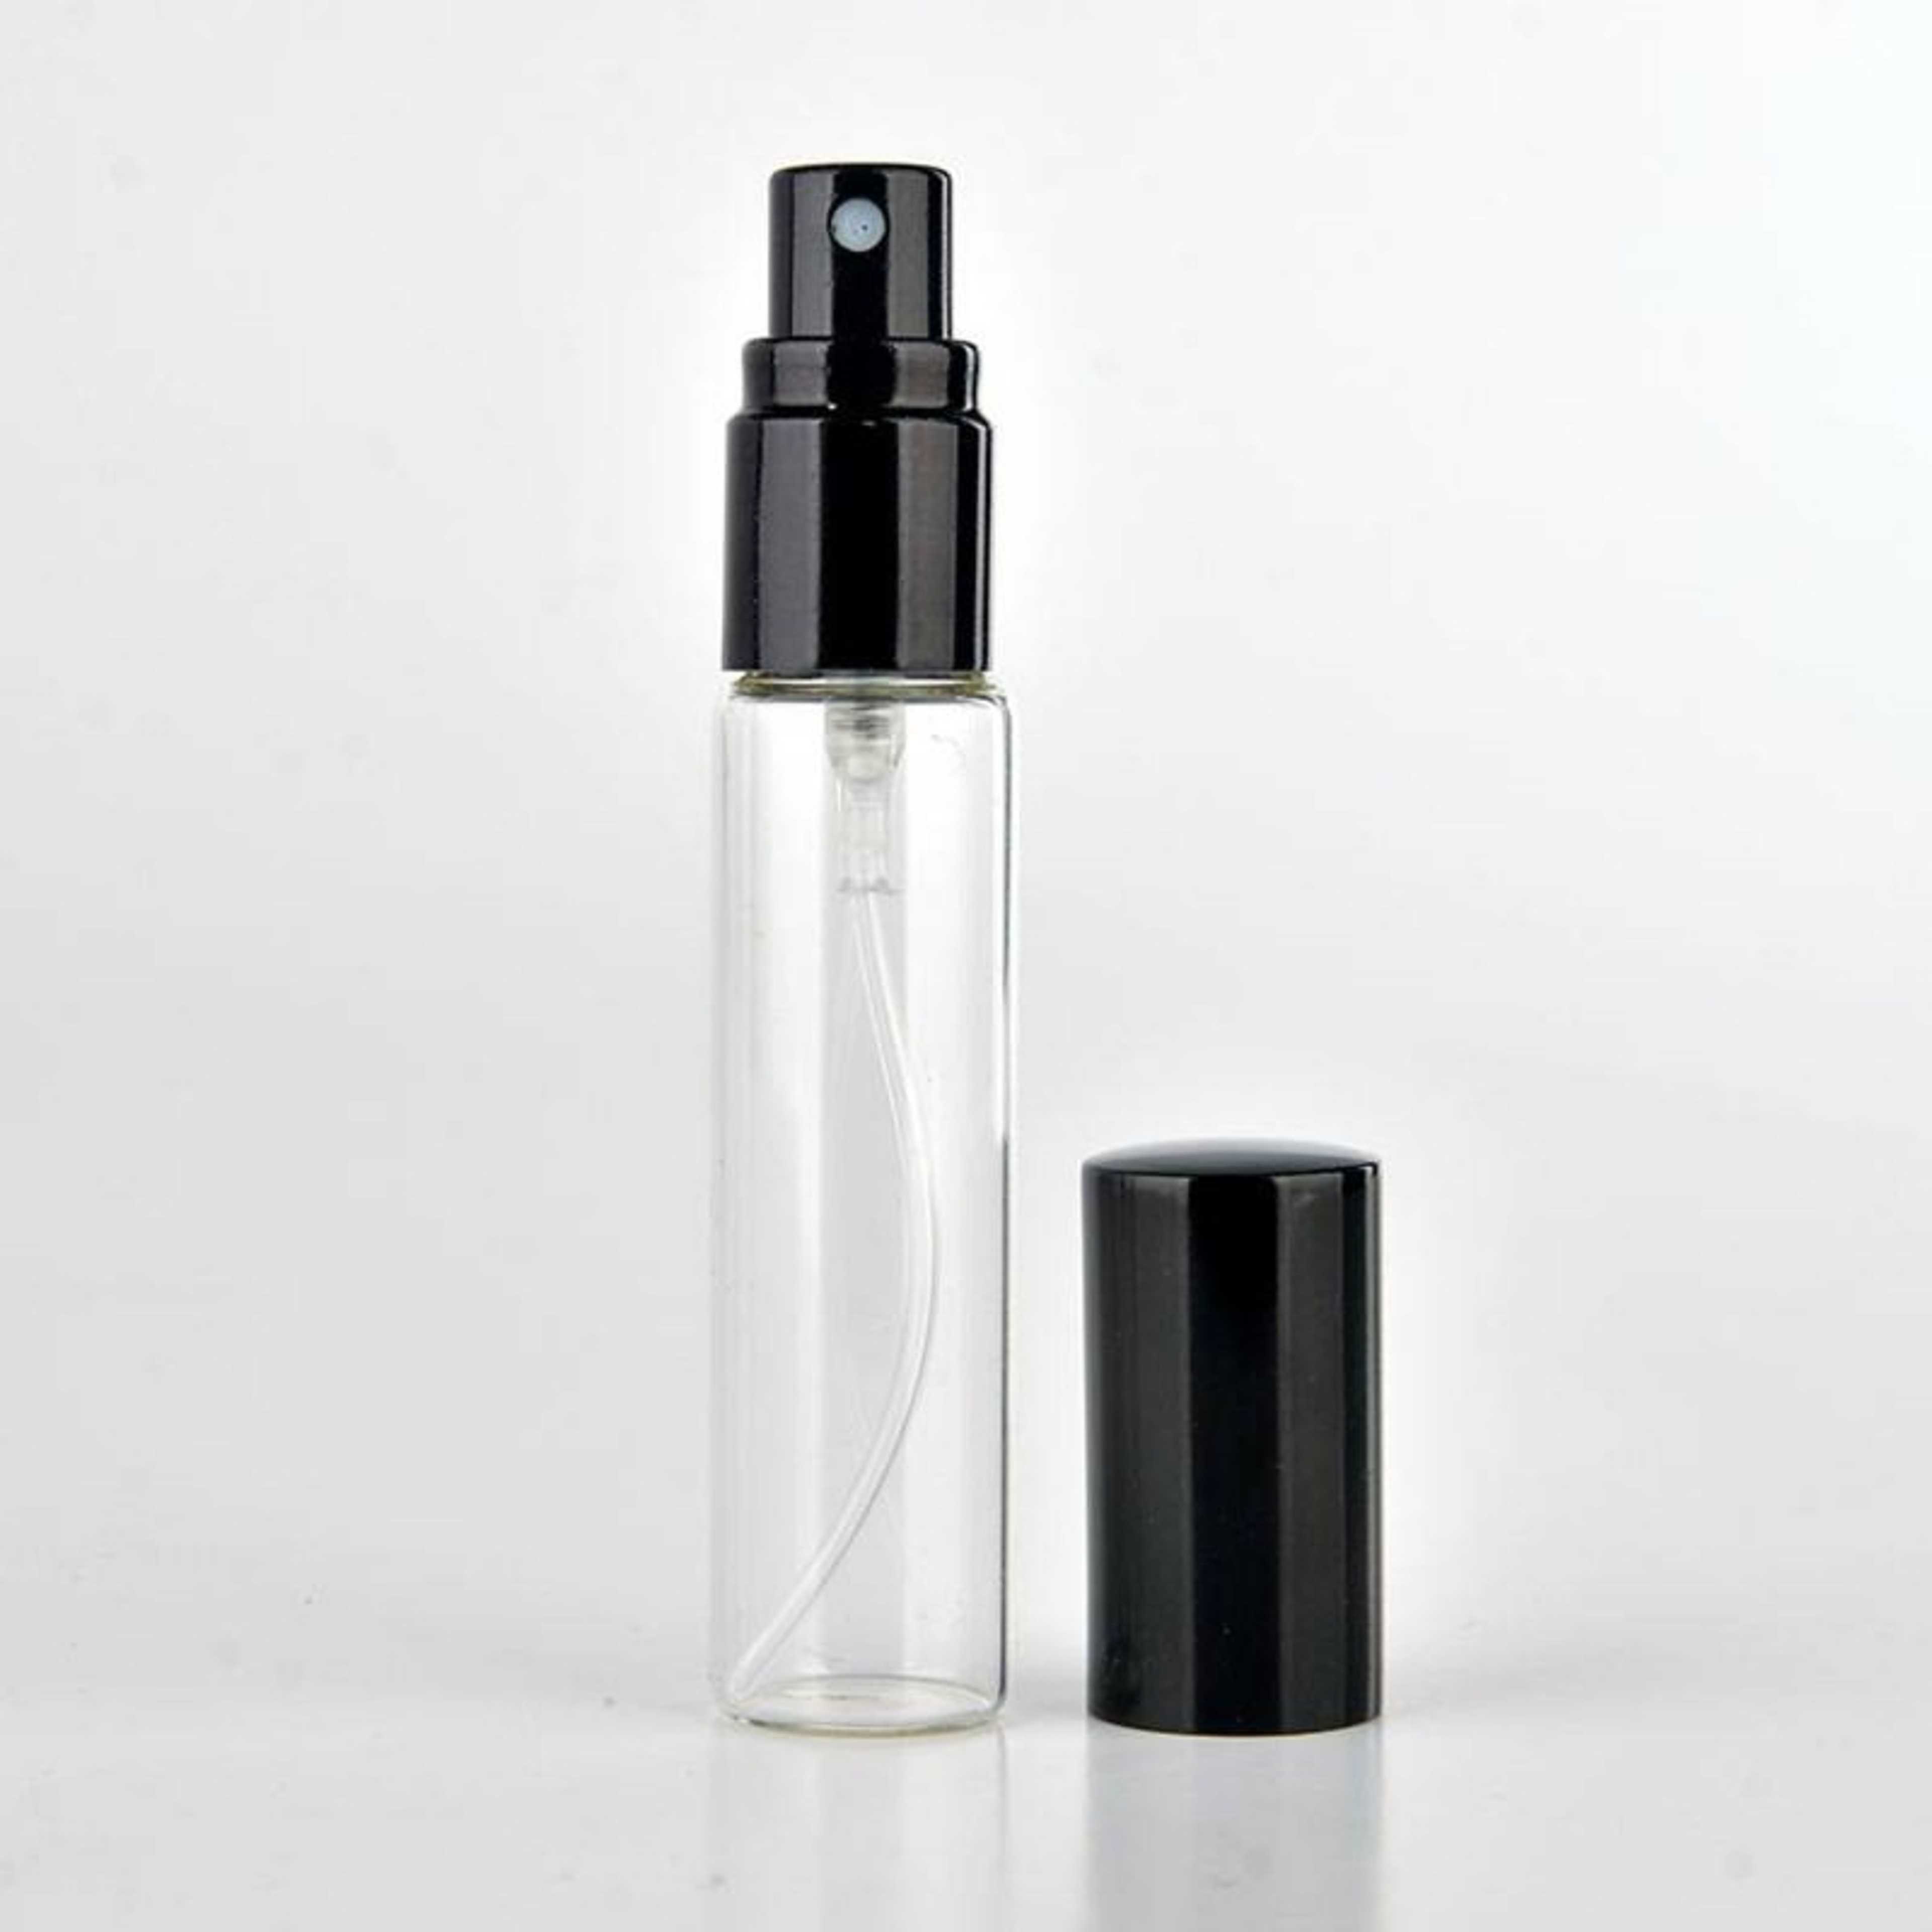 5ml Perfume Spray Bottles Refillable Mini Empty Travel Refillable Glass Bottles 1pcs (5ml)